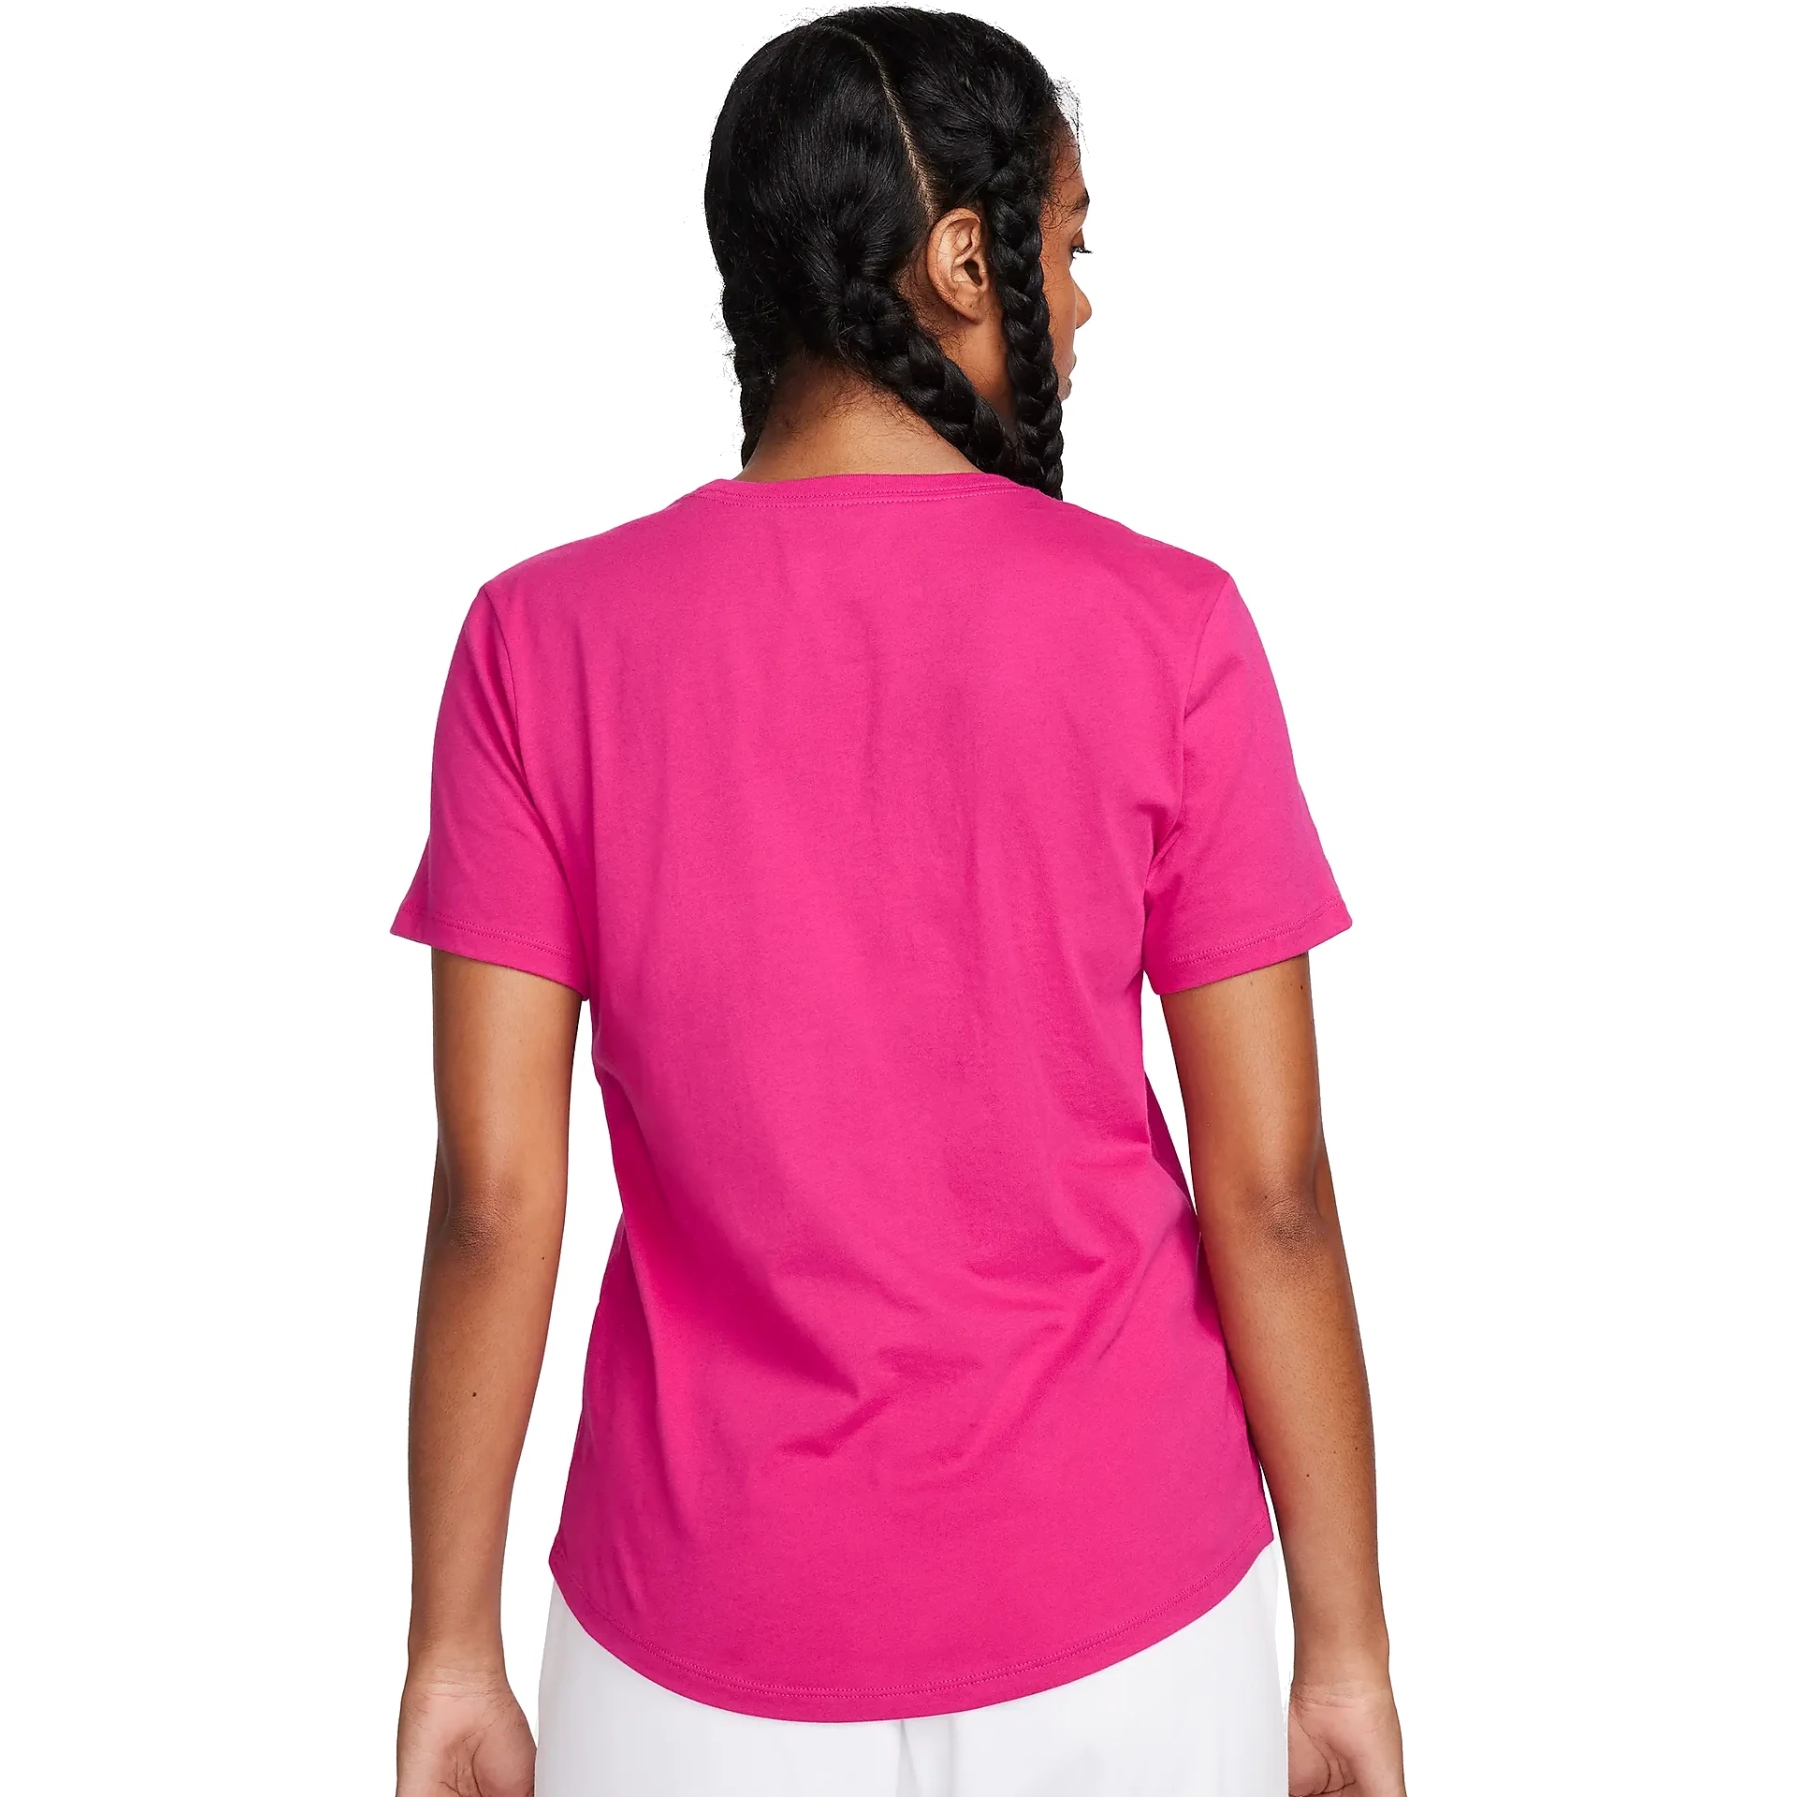 Nike Sportswear CLUB UNISEX - Cap - fireberry/metallic silver/pink 